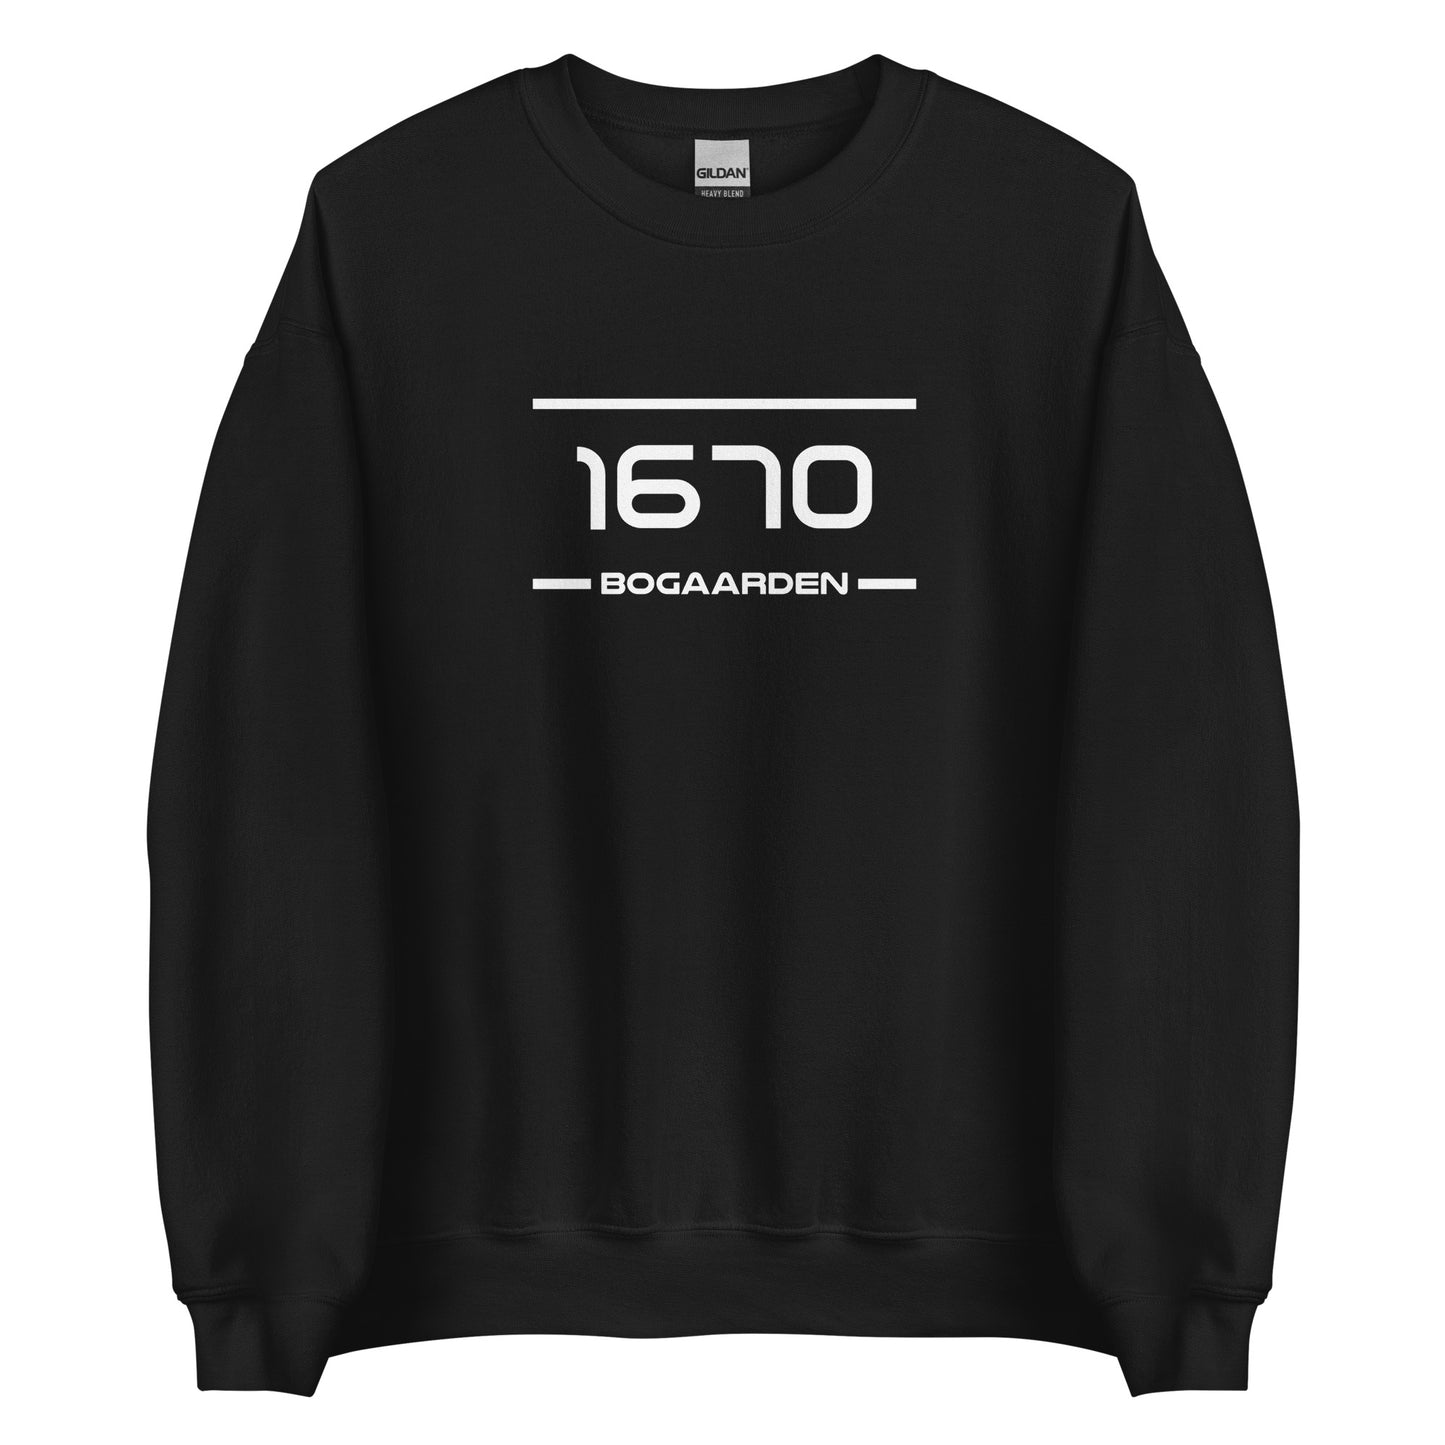 Sweater - 1670 - Bogaarden (M/V)